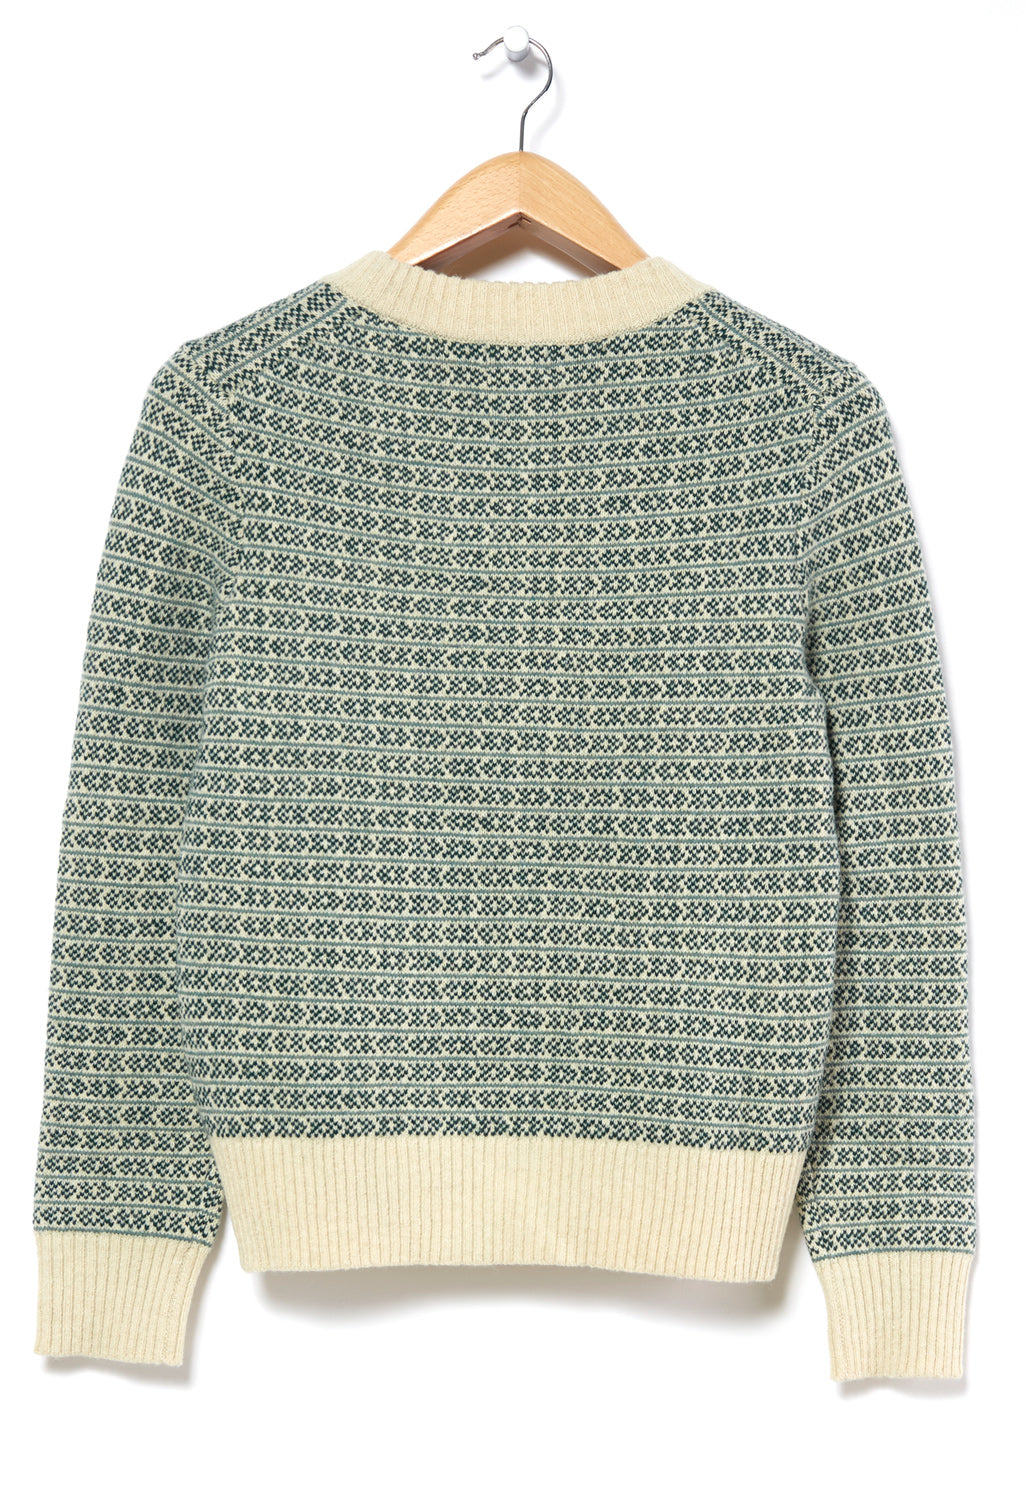 Patagonia Recycled Wool  Crewneck Sweater - Natural/Sapling